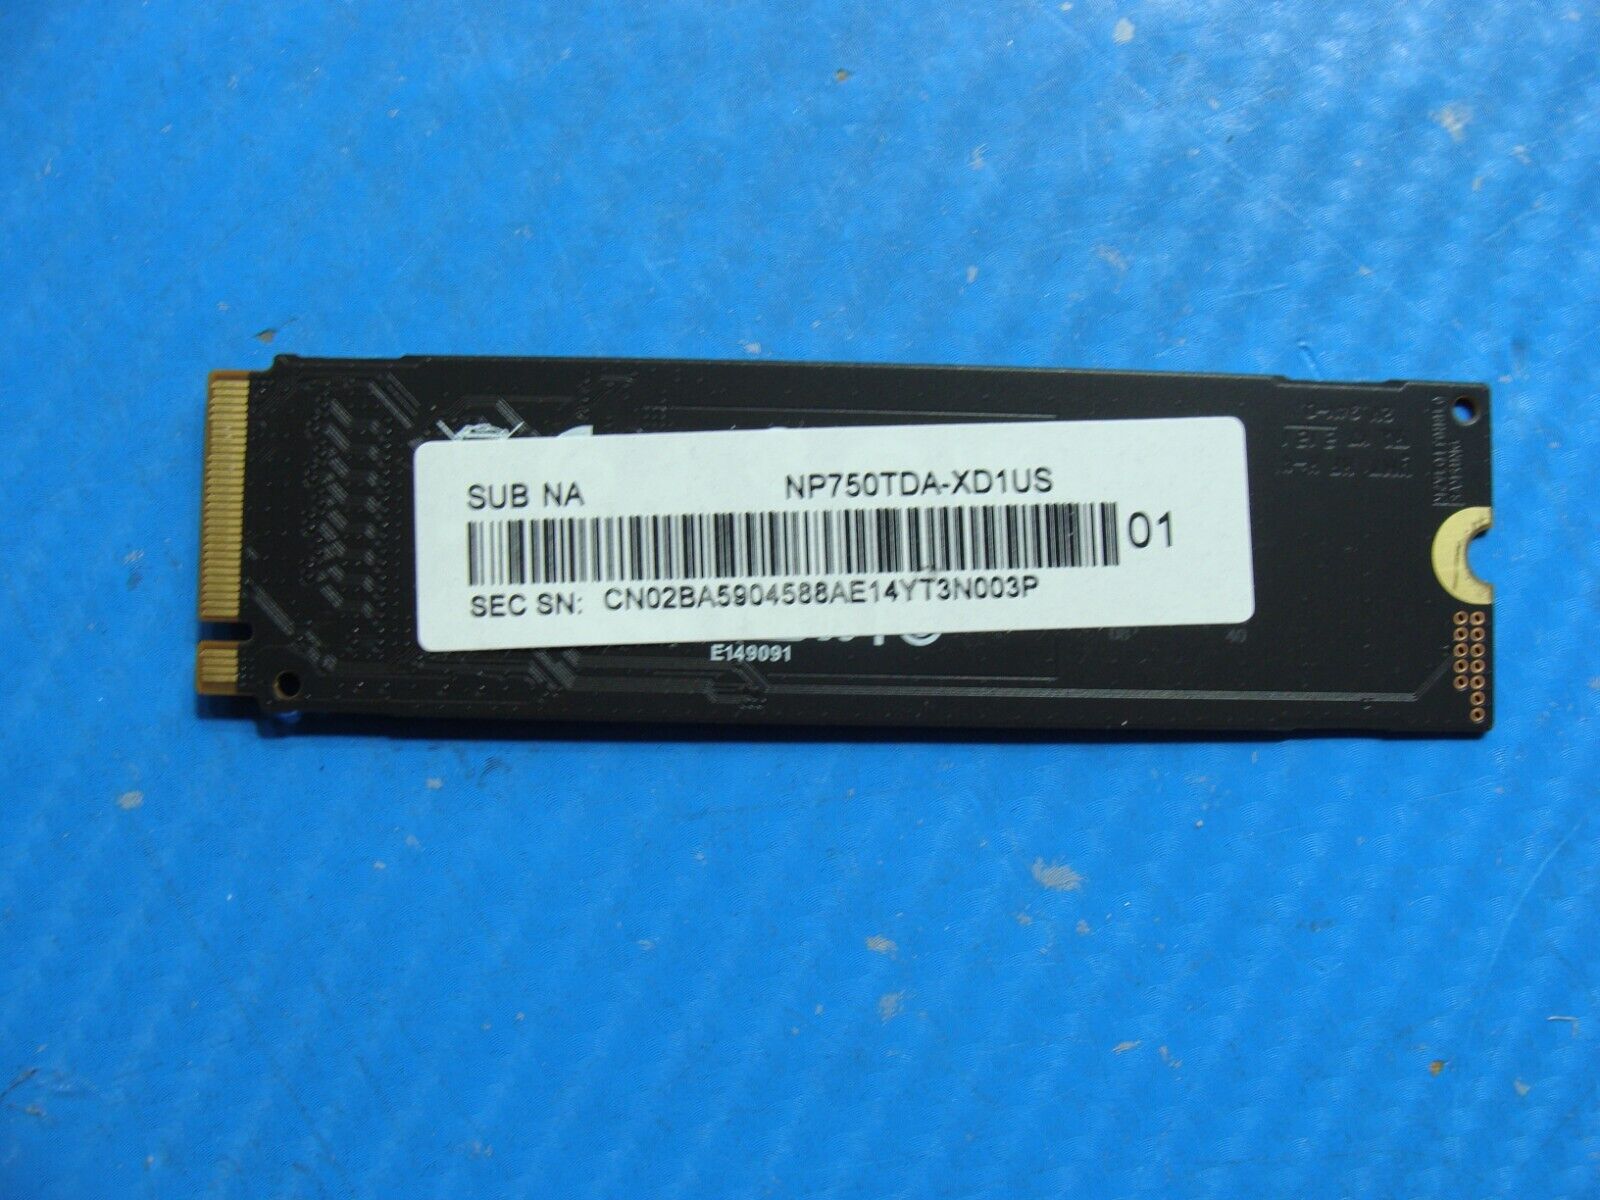 Samsung NP750TDA-XD1US Samsung 256GB NVMe M.2 SSD Solid State Drive MZ-VLQ256B